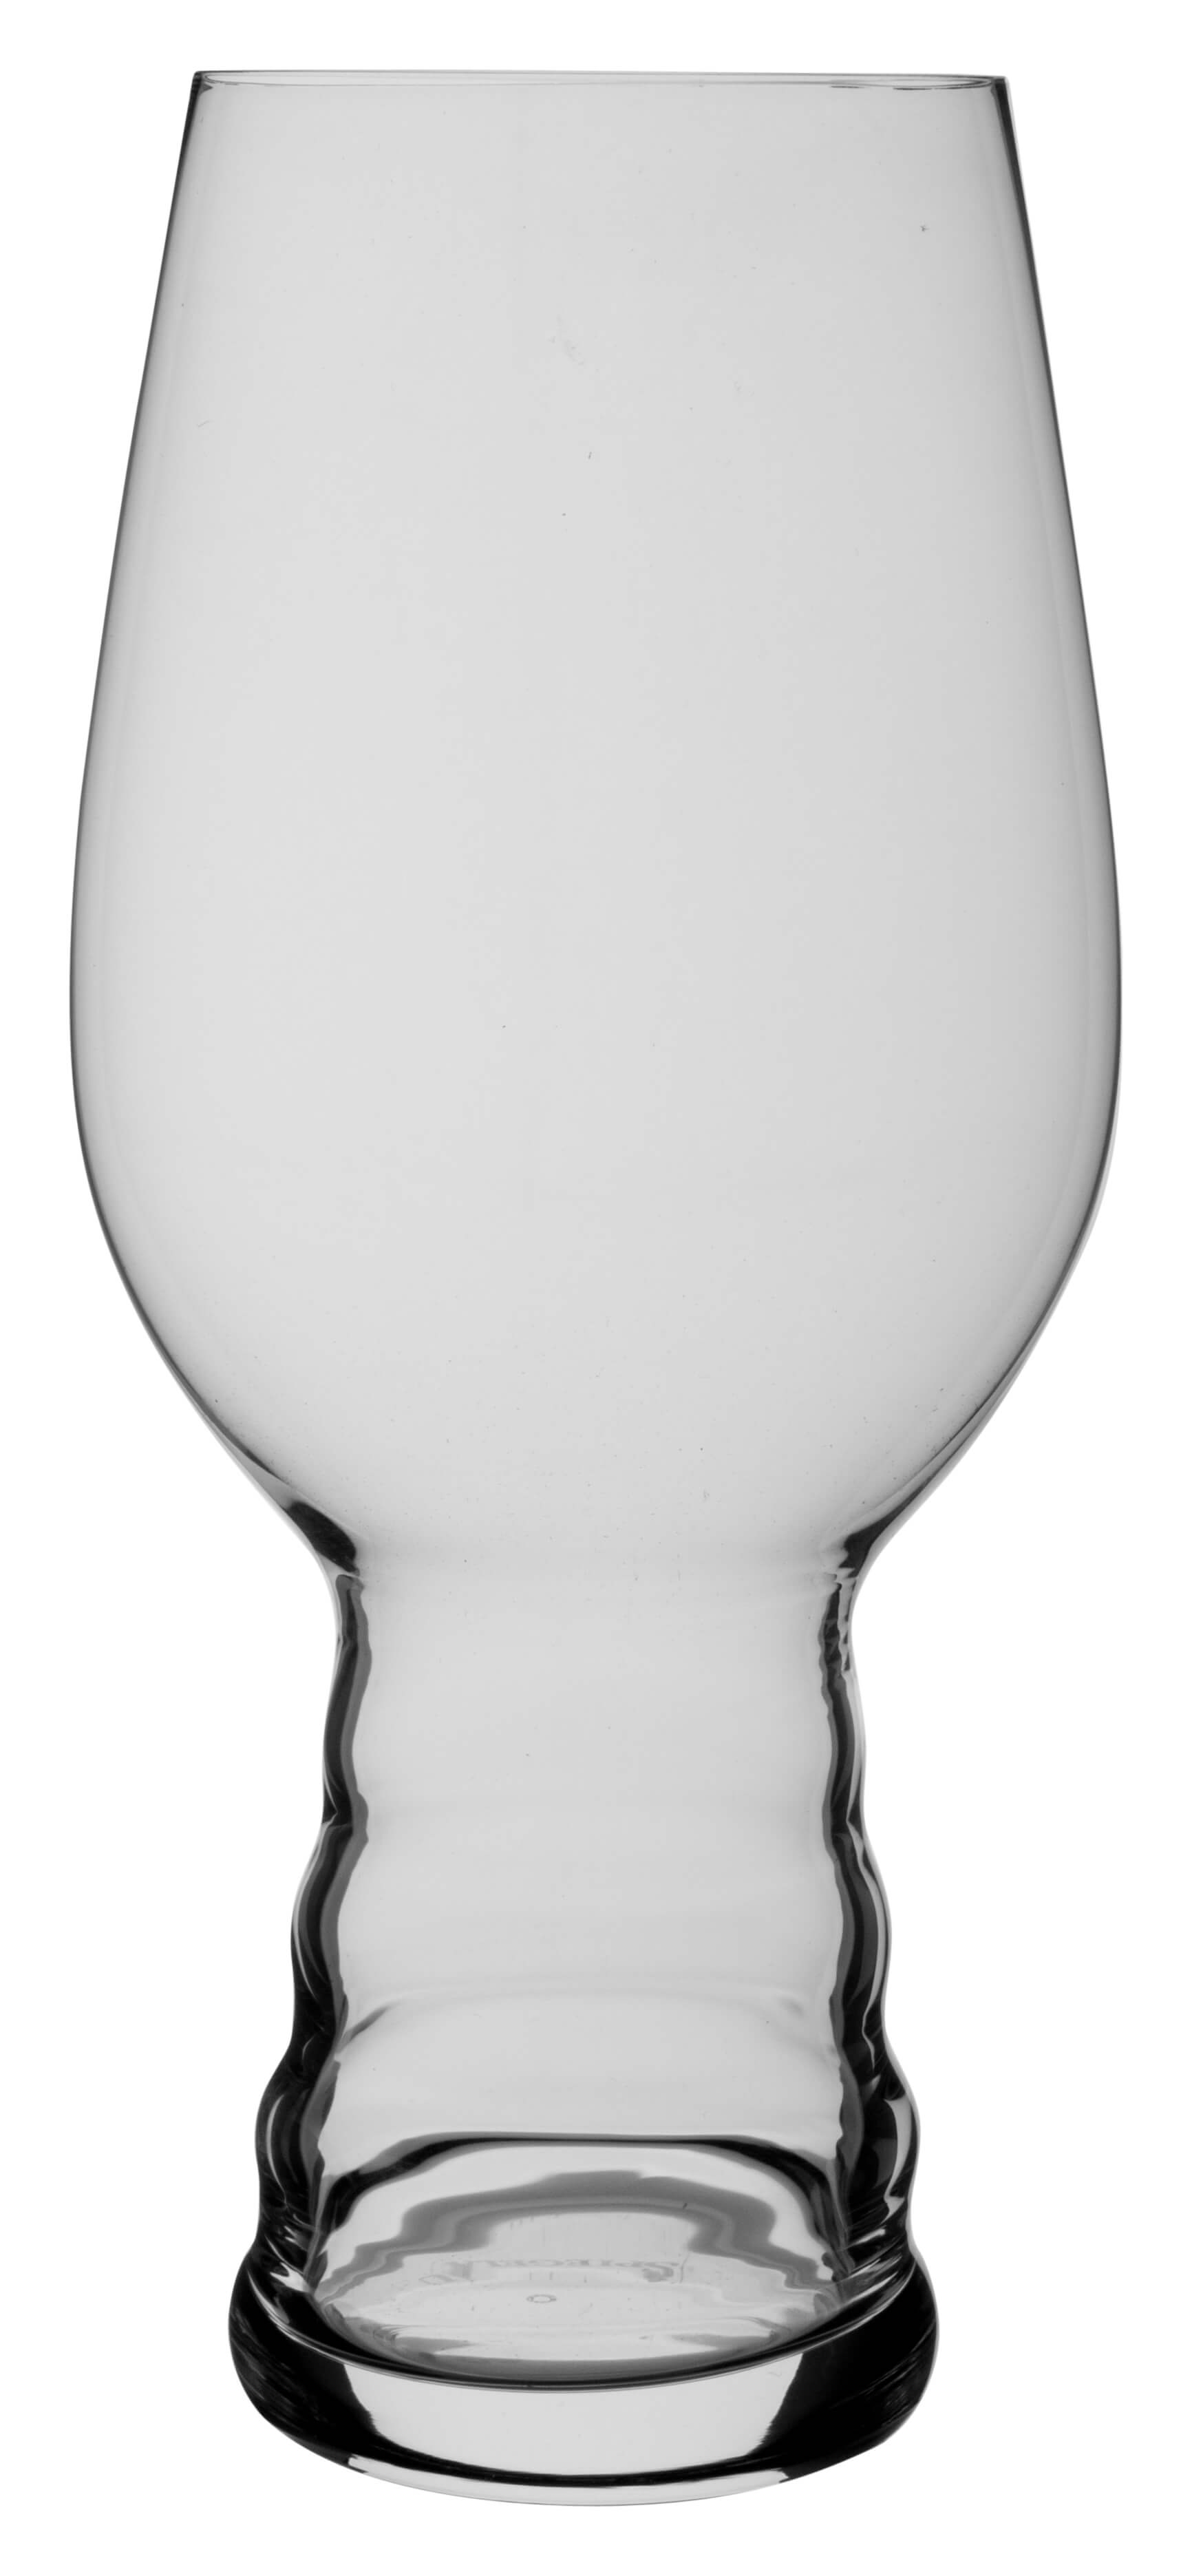 IPA Glas, Craft Beer Glasses, Spiegelau - 540ml